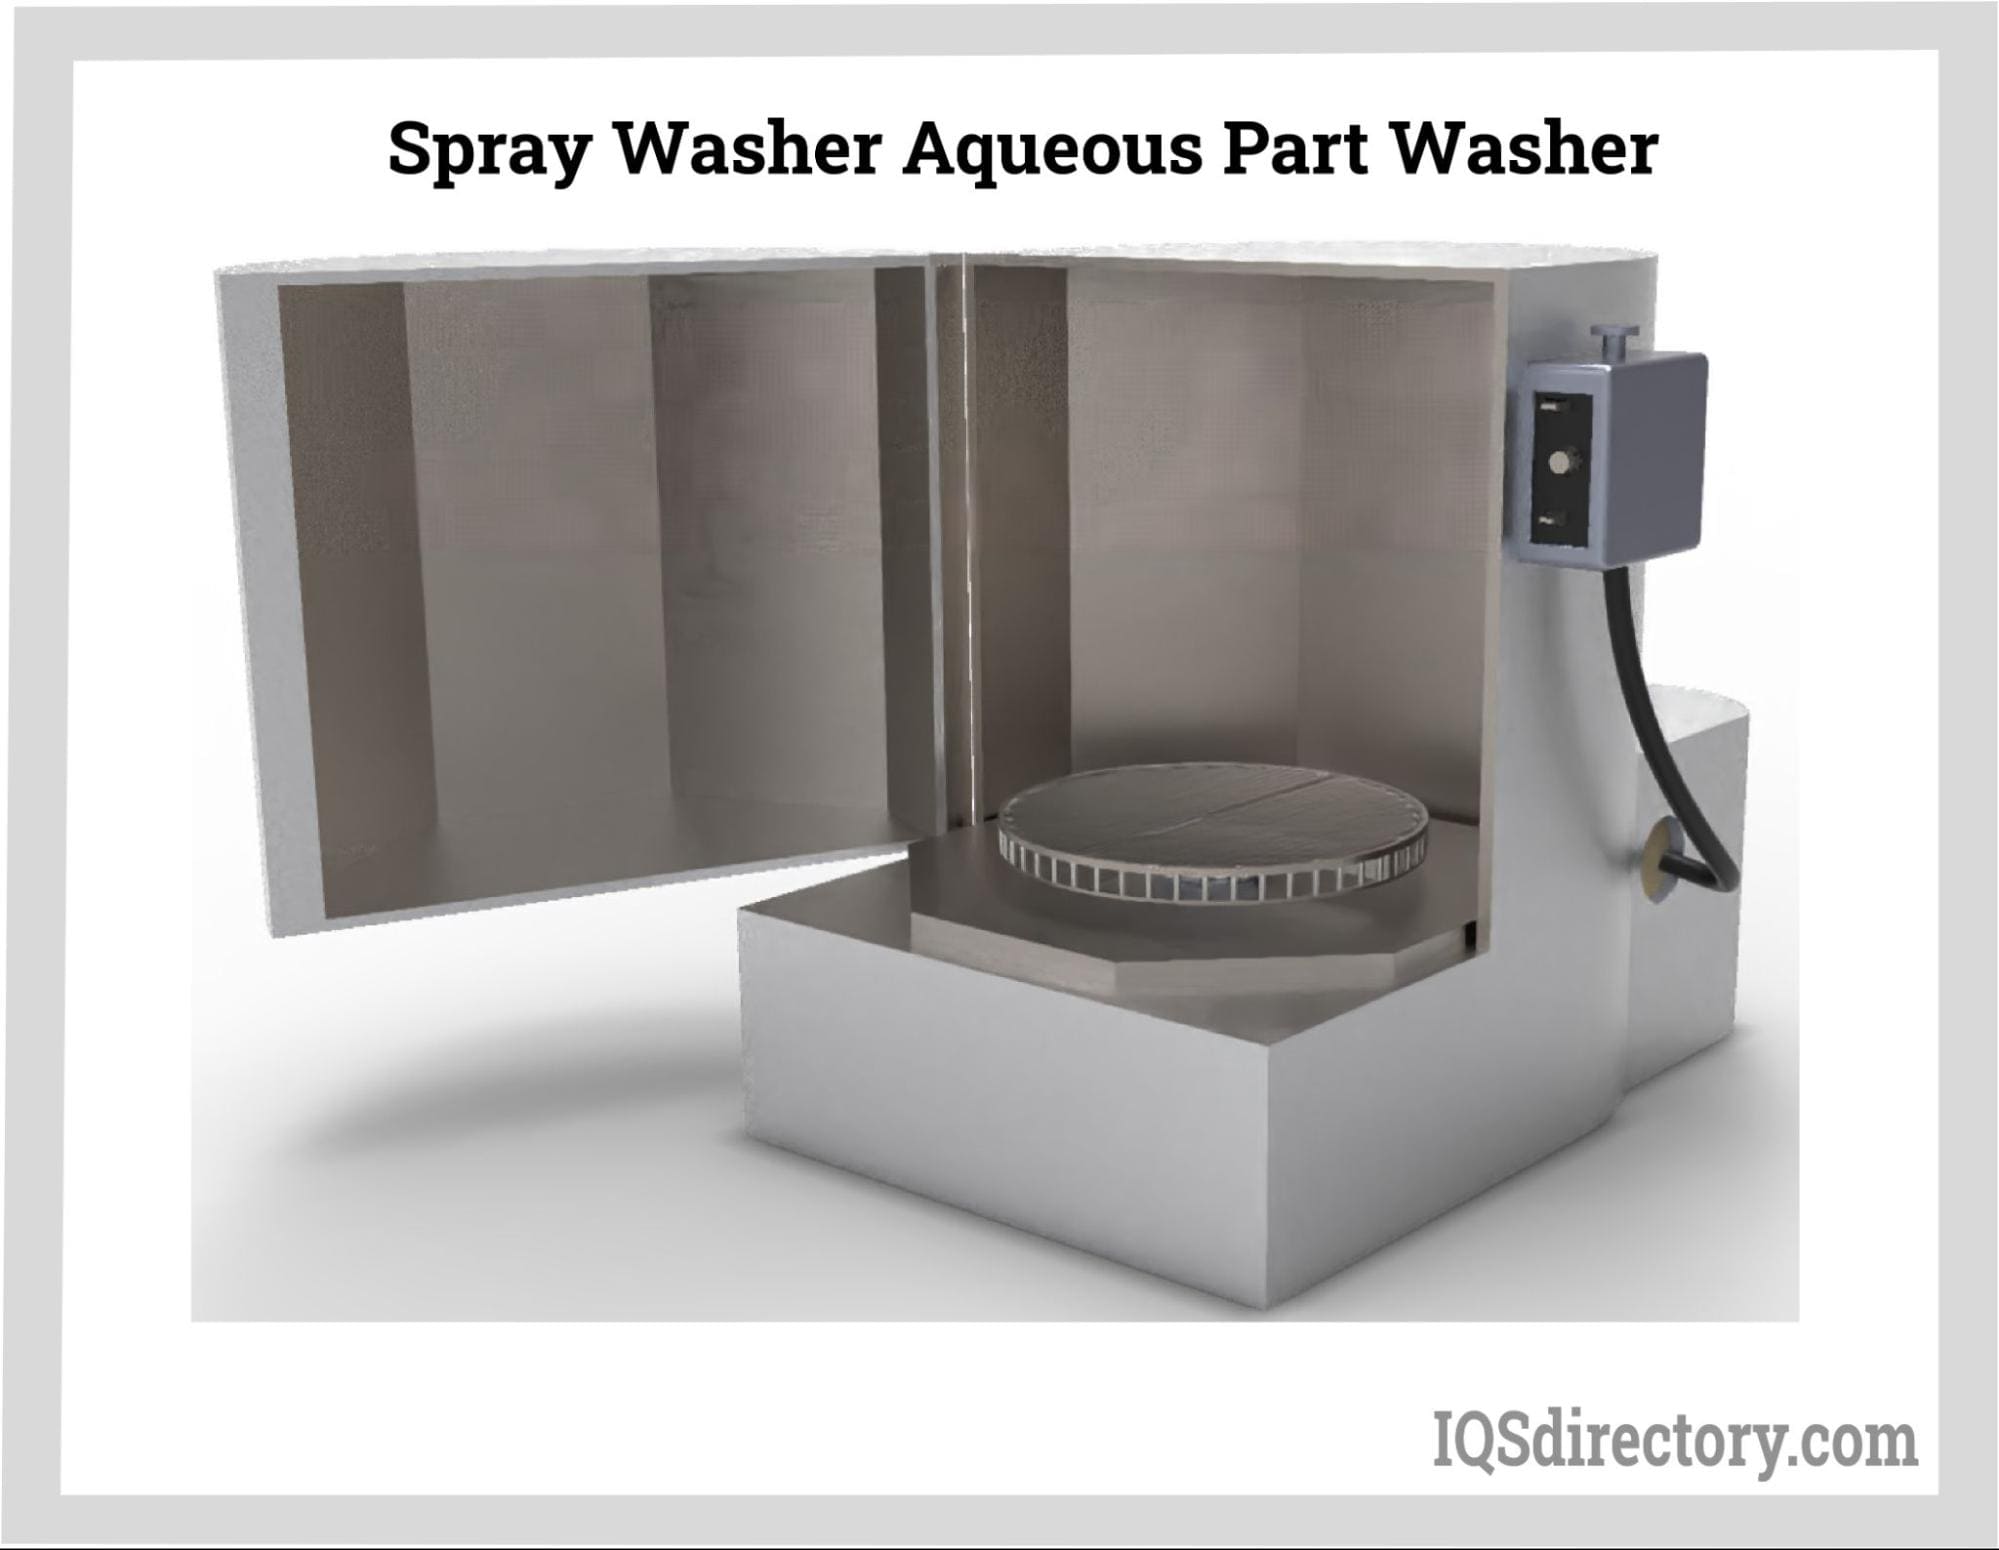 Spray Washer Aqueous Part Washer